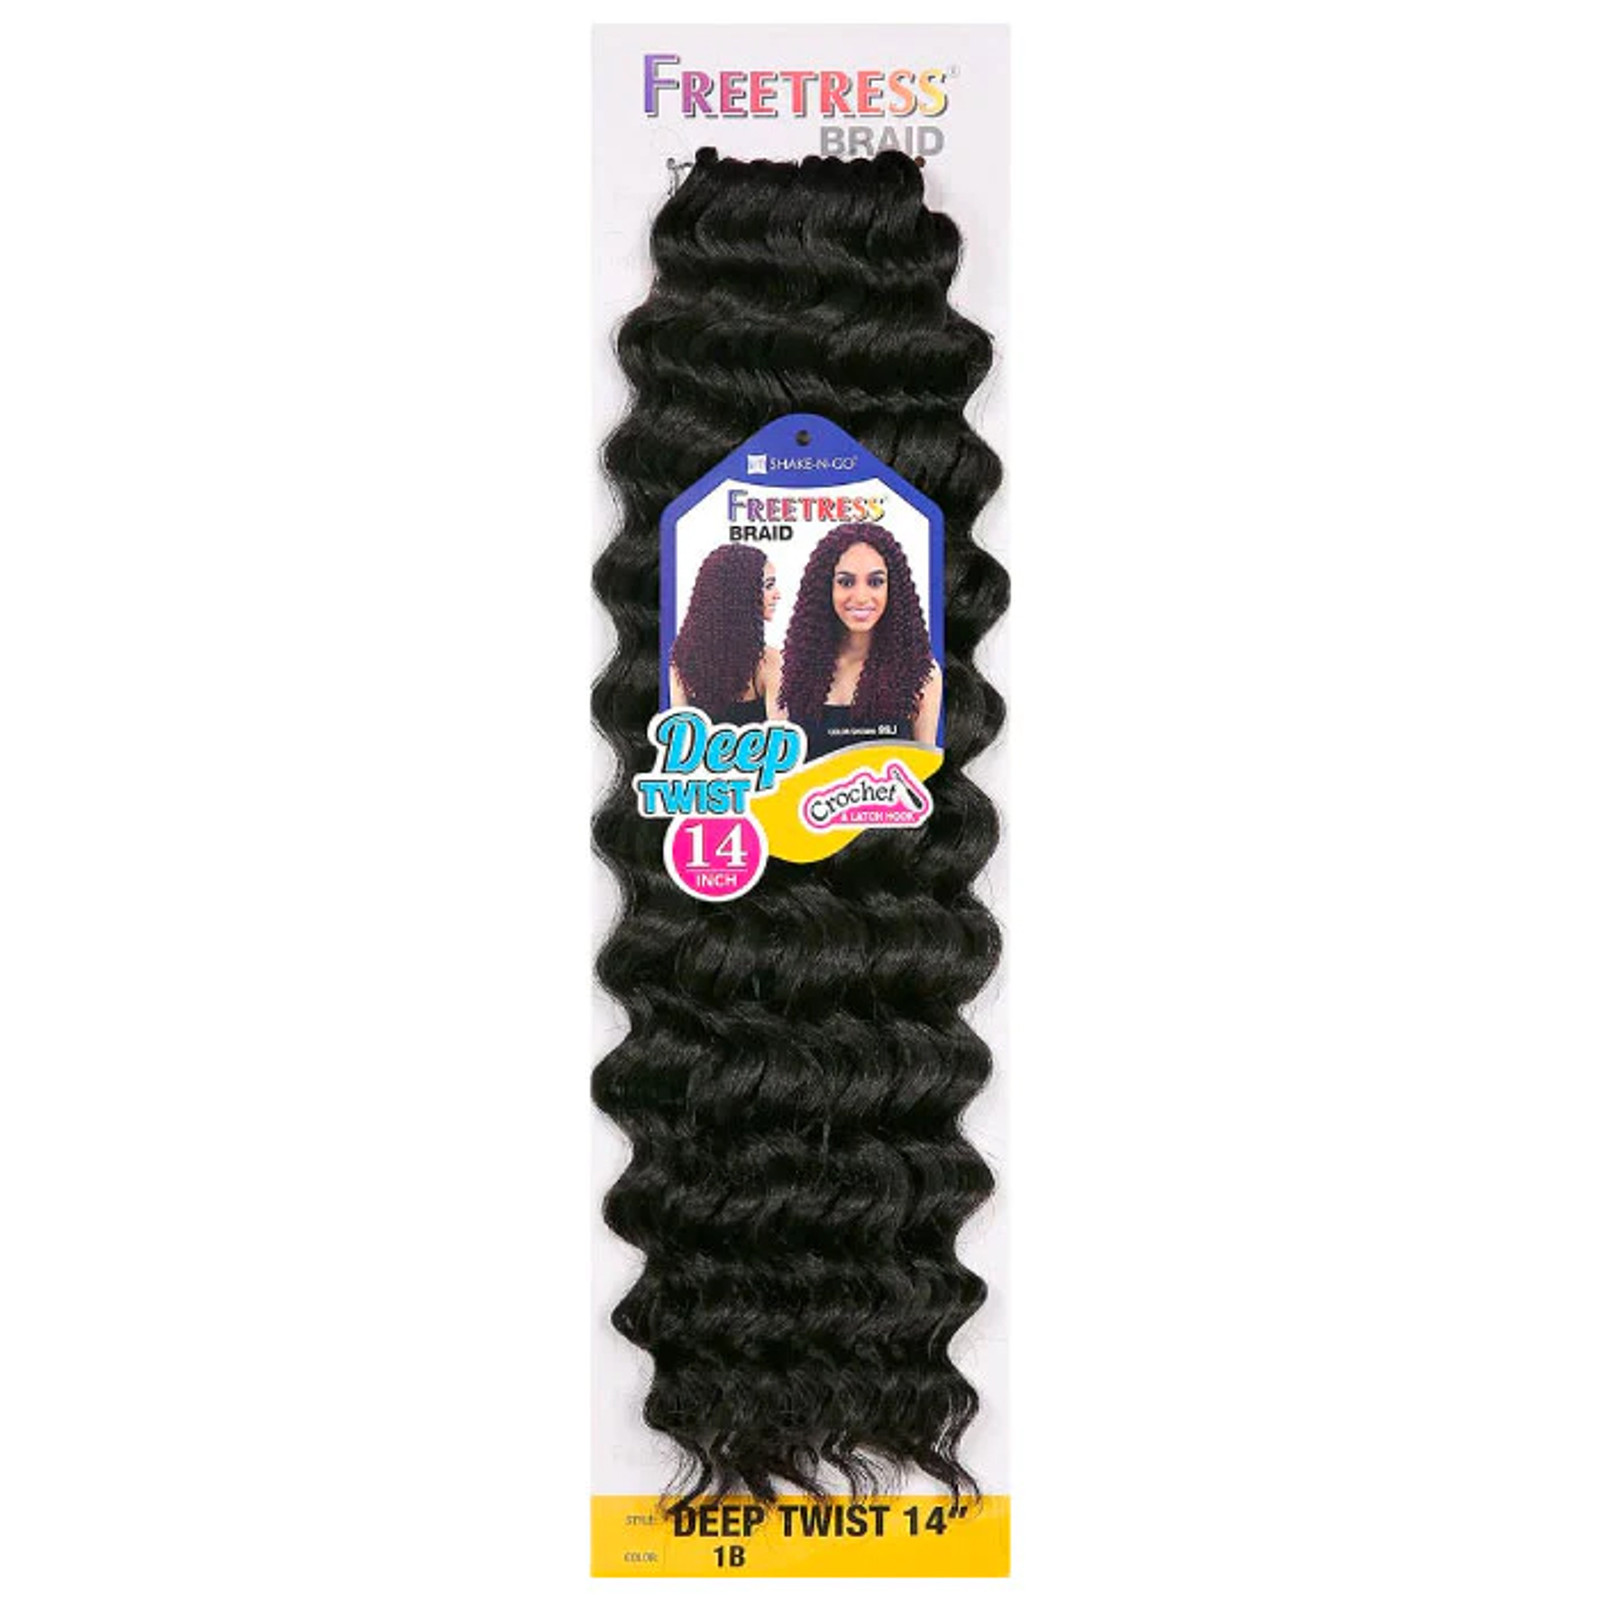 FREETRESS Braid Synthetic Crochet Hair - DEEP TWIST 14